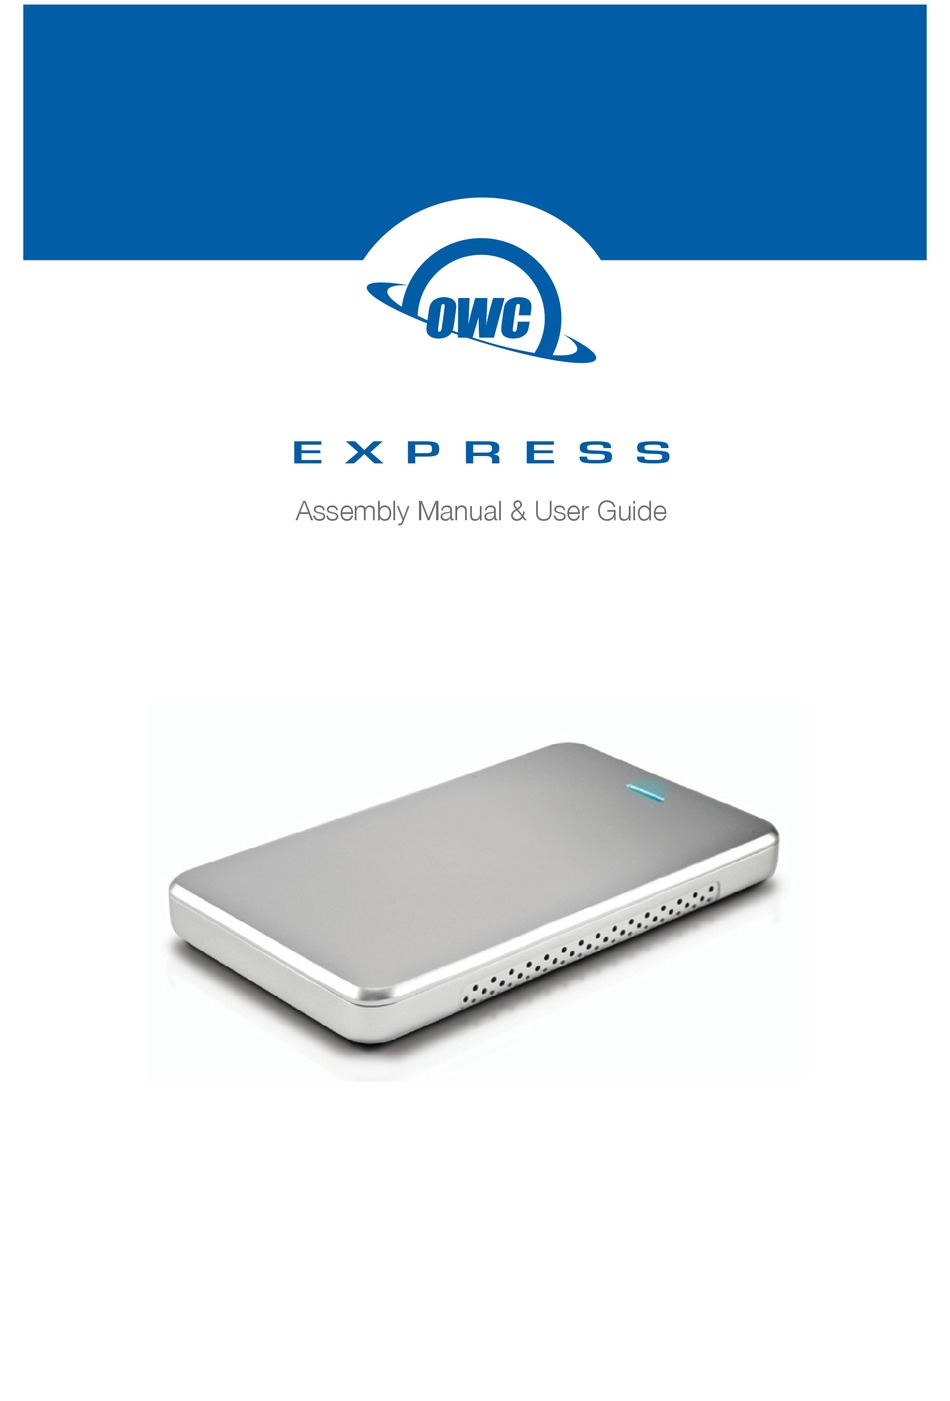 OWC EXPRESS ASSEMBLY MANUAL & USER MANUAL Pdf Download | ManualsLib